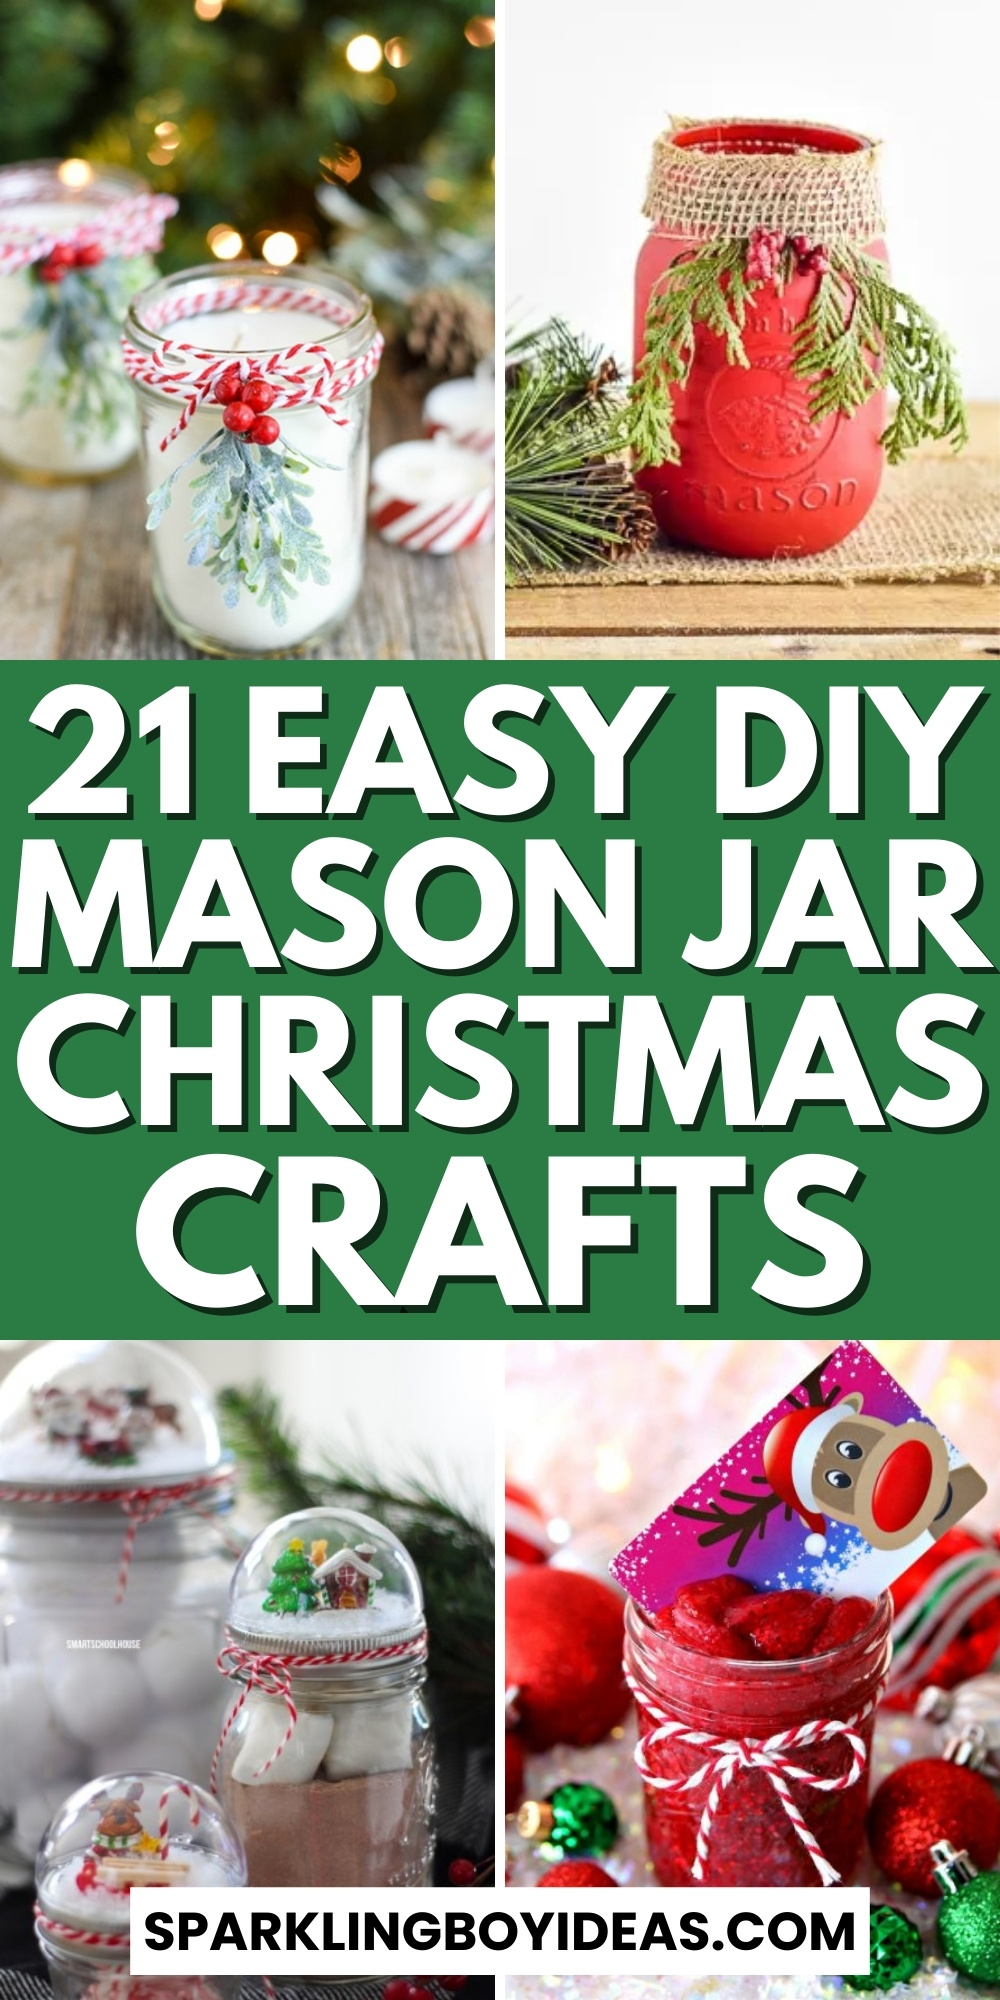 21 Best Mason Jar Christmas Crafts - Sparkling Boy Ideas